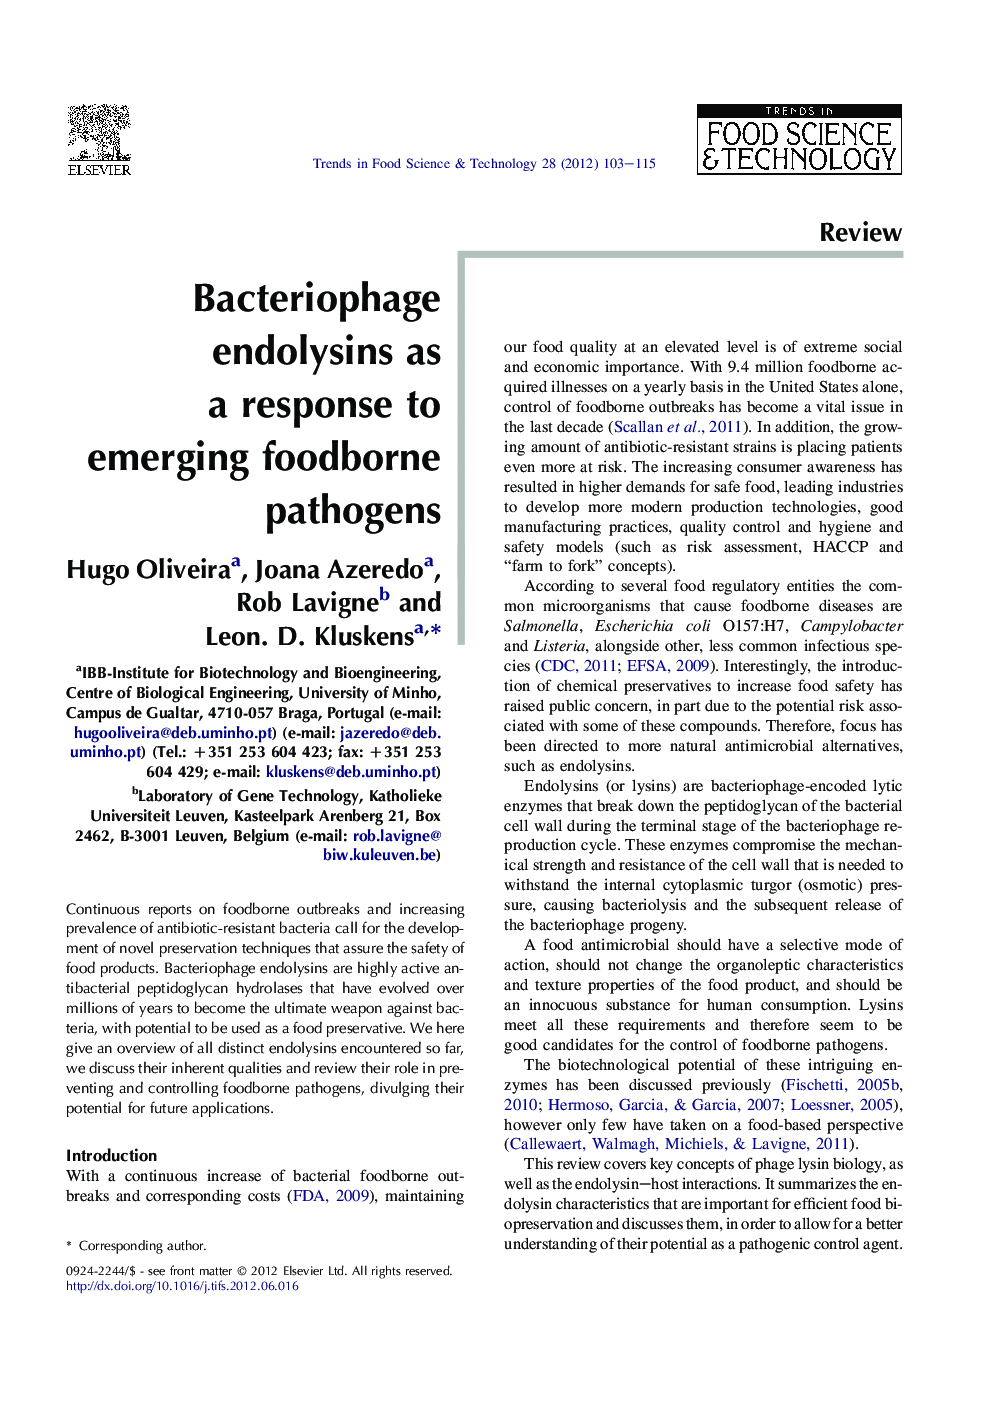 Bacteriophage endolysins as a response to emerging foodborne pathogens